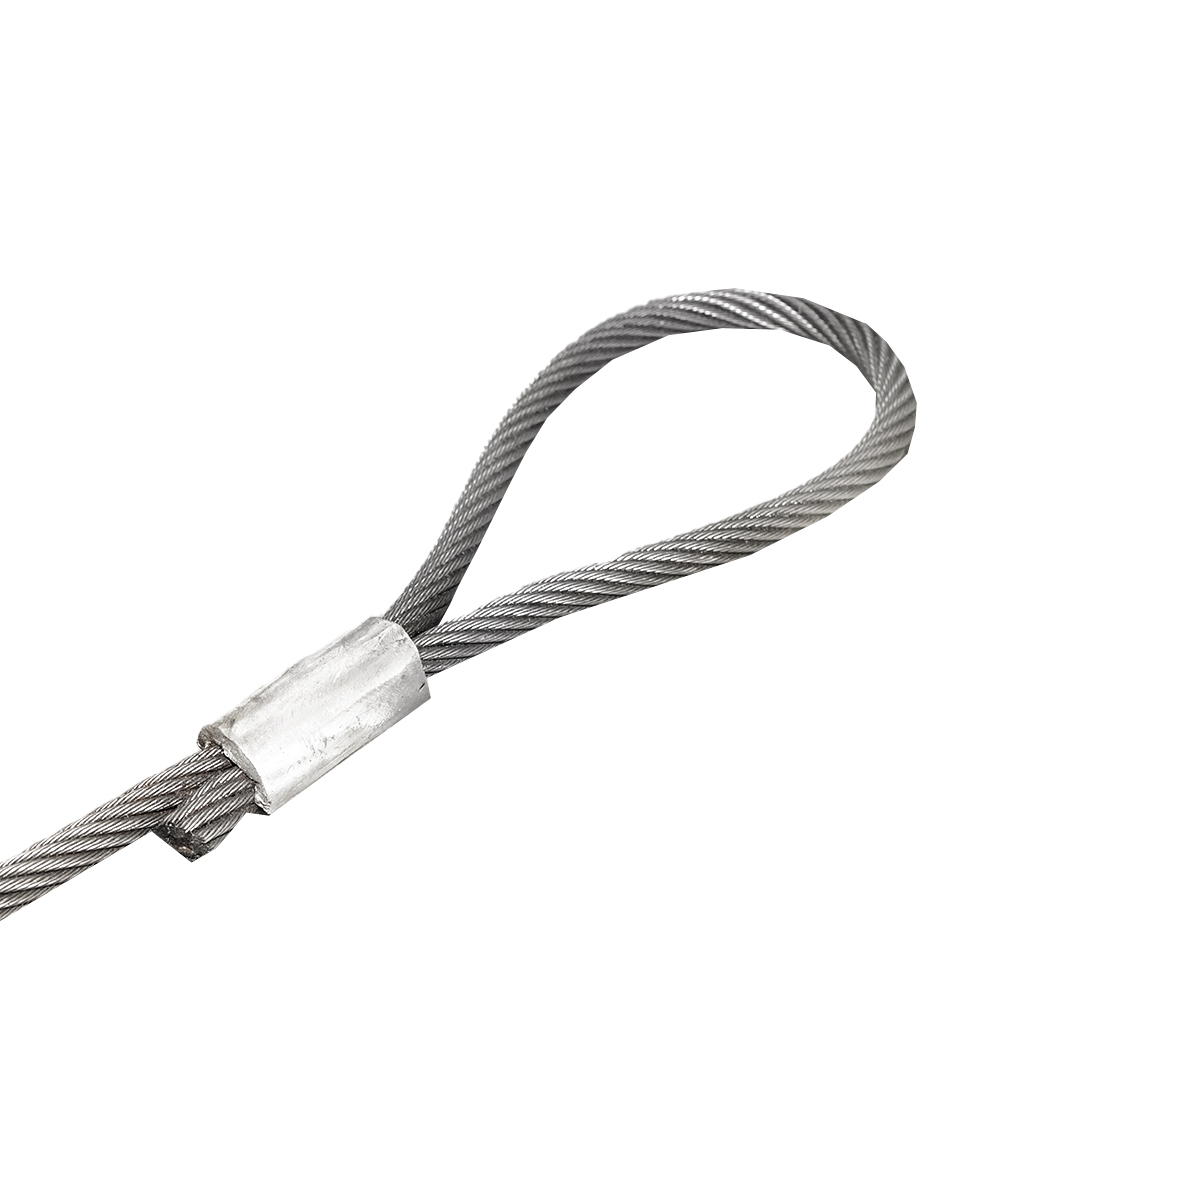 Cablu/sufa troliu din otel cu grosime de 28mm si lungime de 6m cu inele pentru tractat sau ridicat